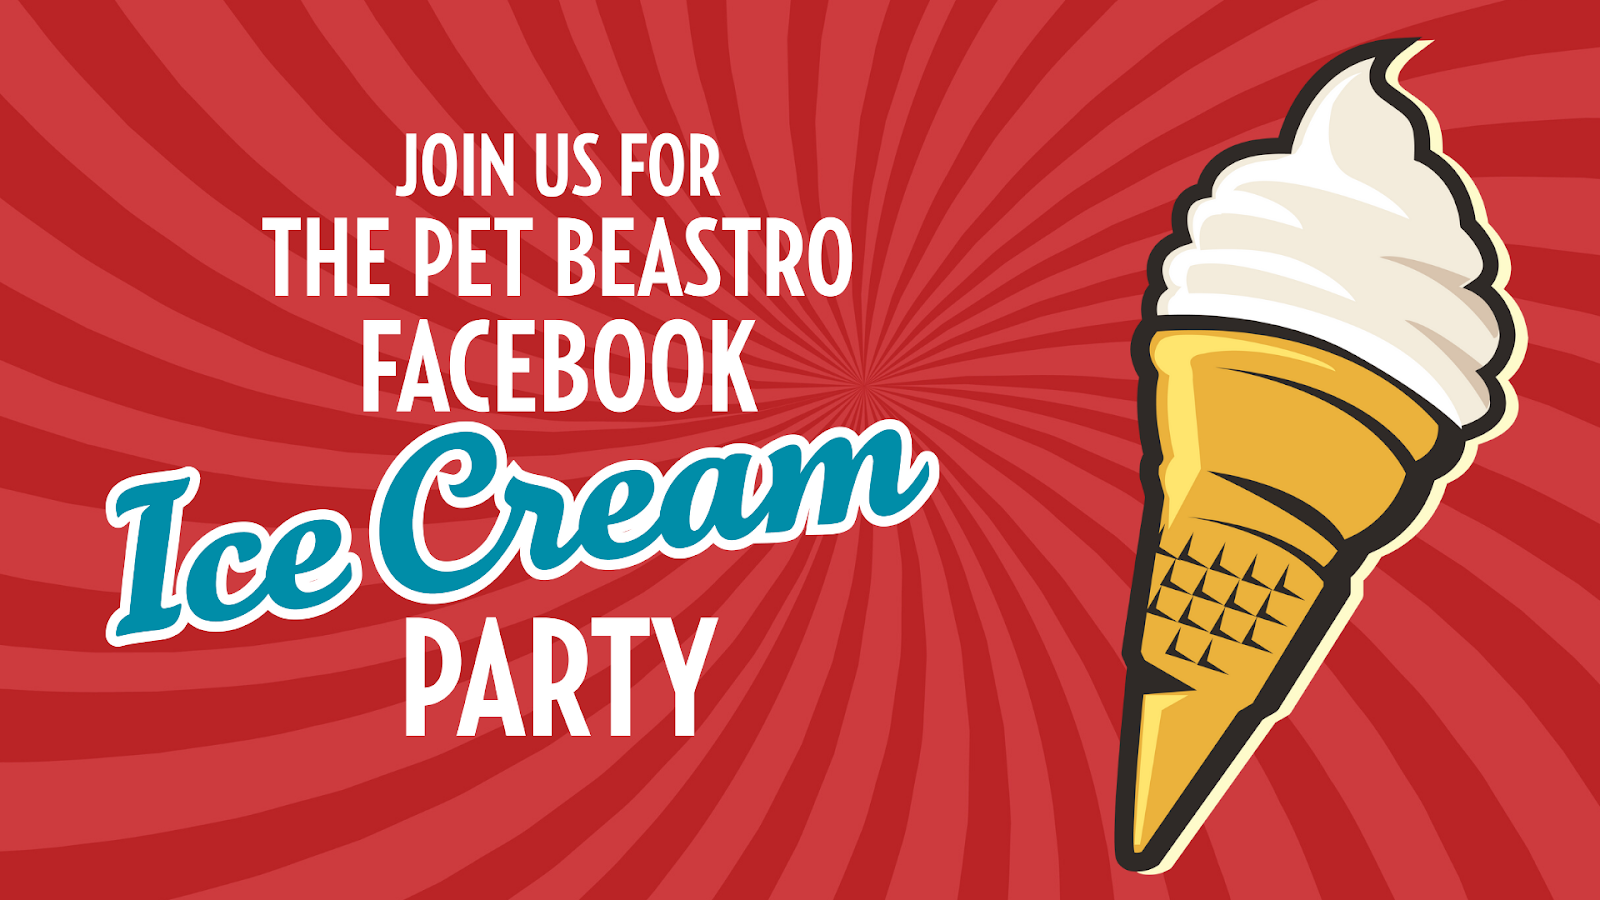 The Pet Beastro Virtual Ice Cream Facebook Party